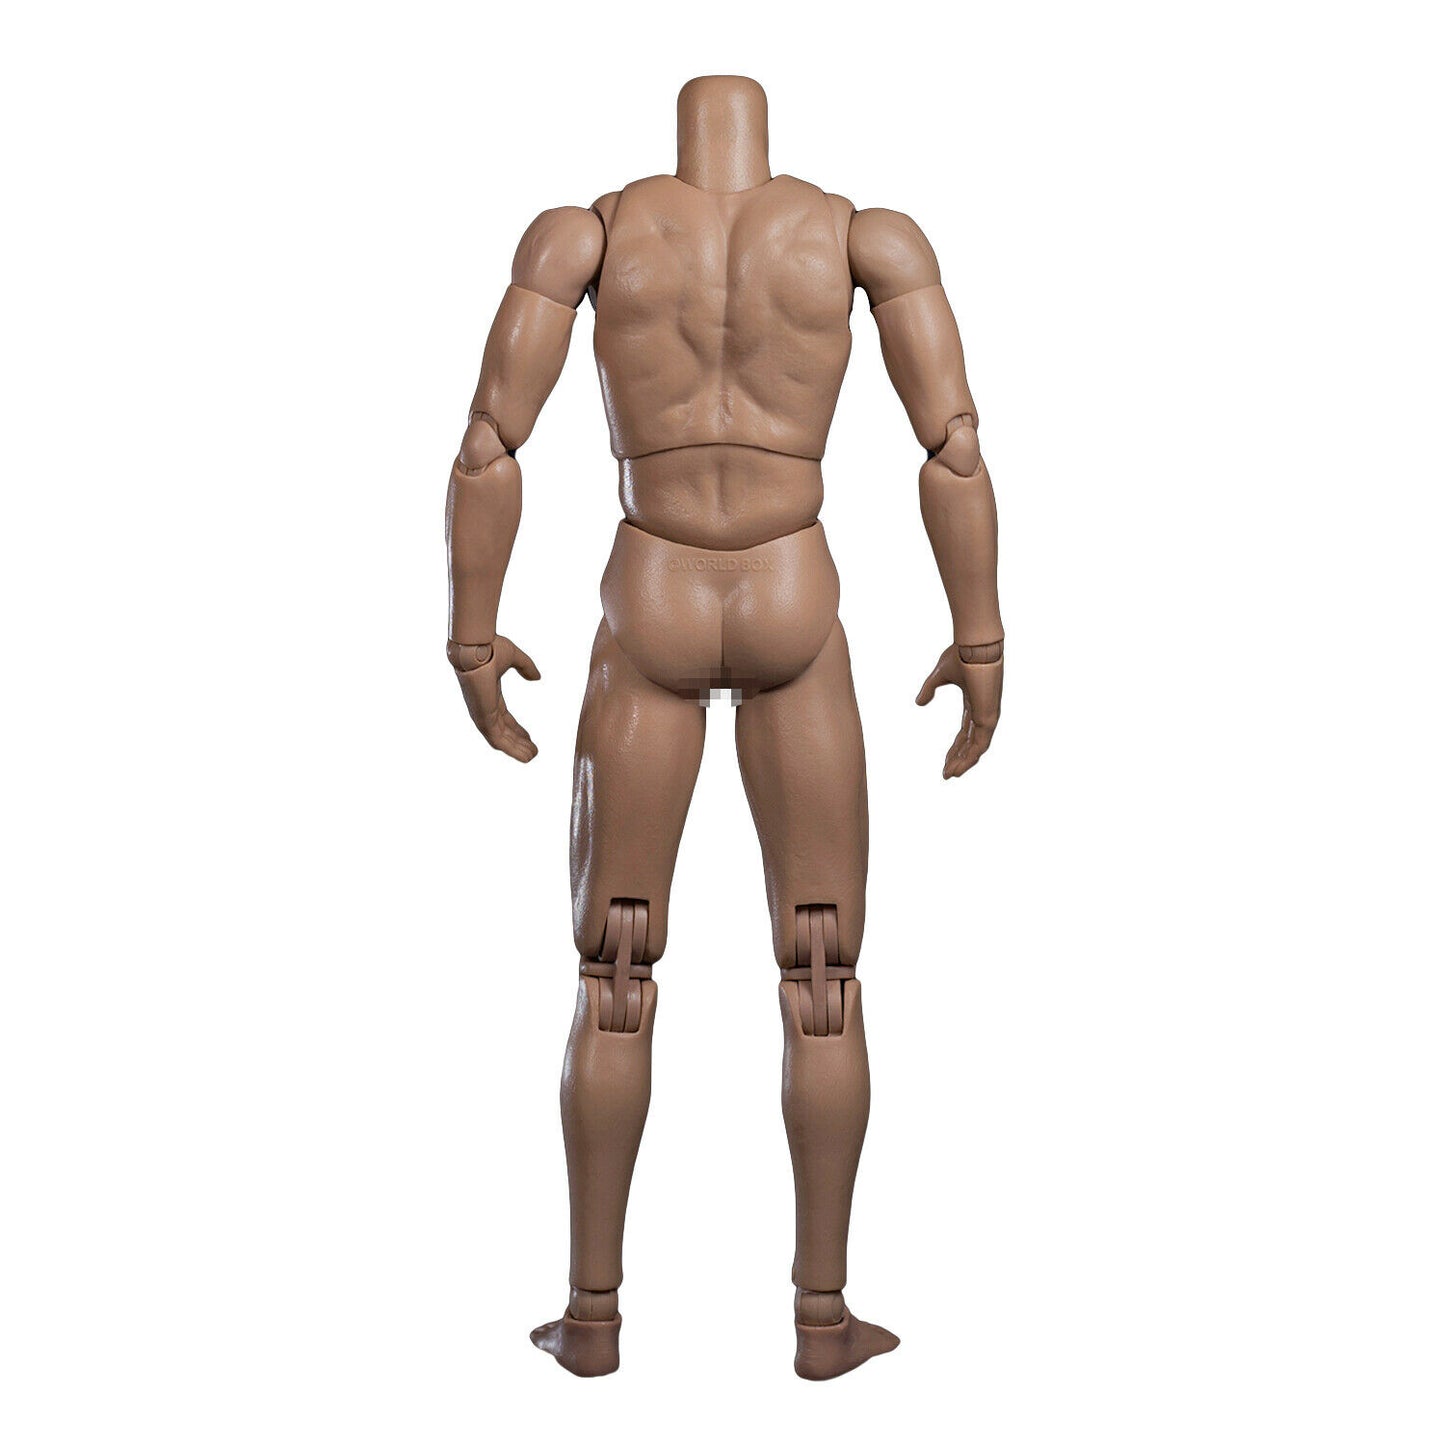 [PEDIDO] Cuerpo articulado masculino Universal marca Worldbox AT020 escala 1/6